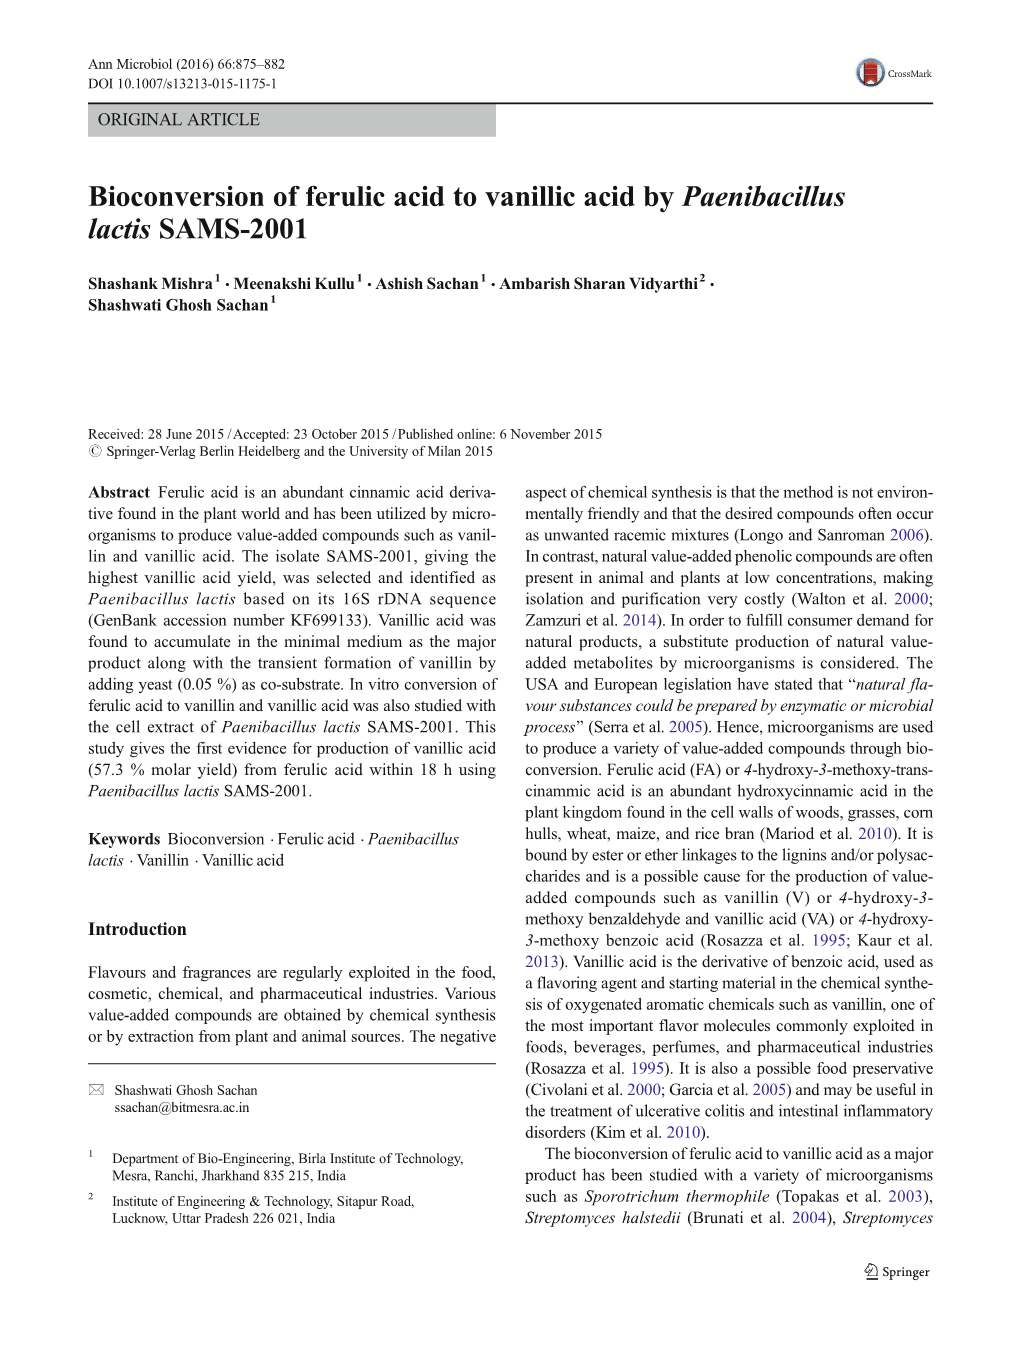 Bioconversion of Ferulic Acid to Vanillic Acid by Paenibacillus Lactis SAMS-2001